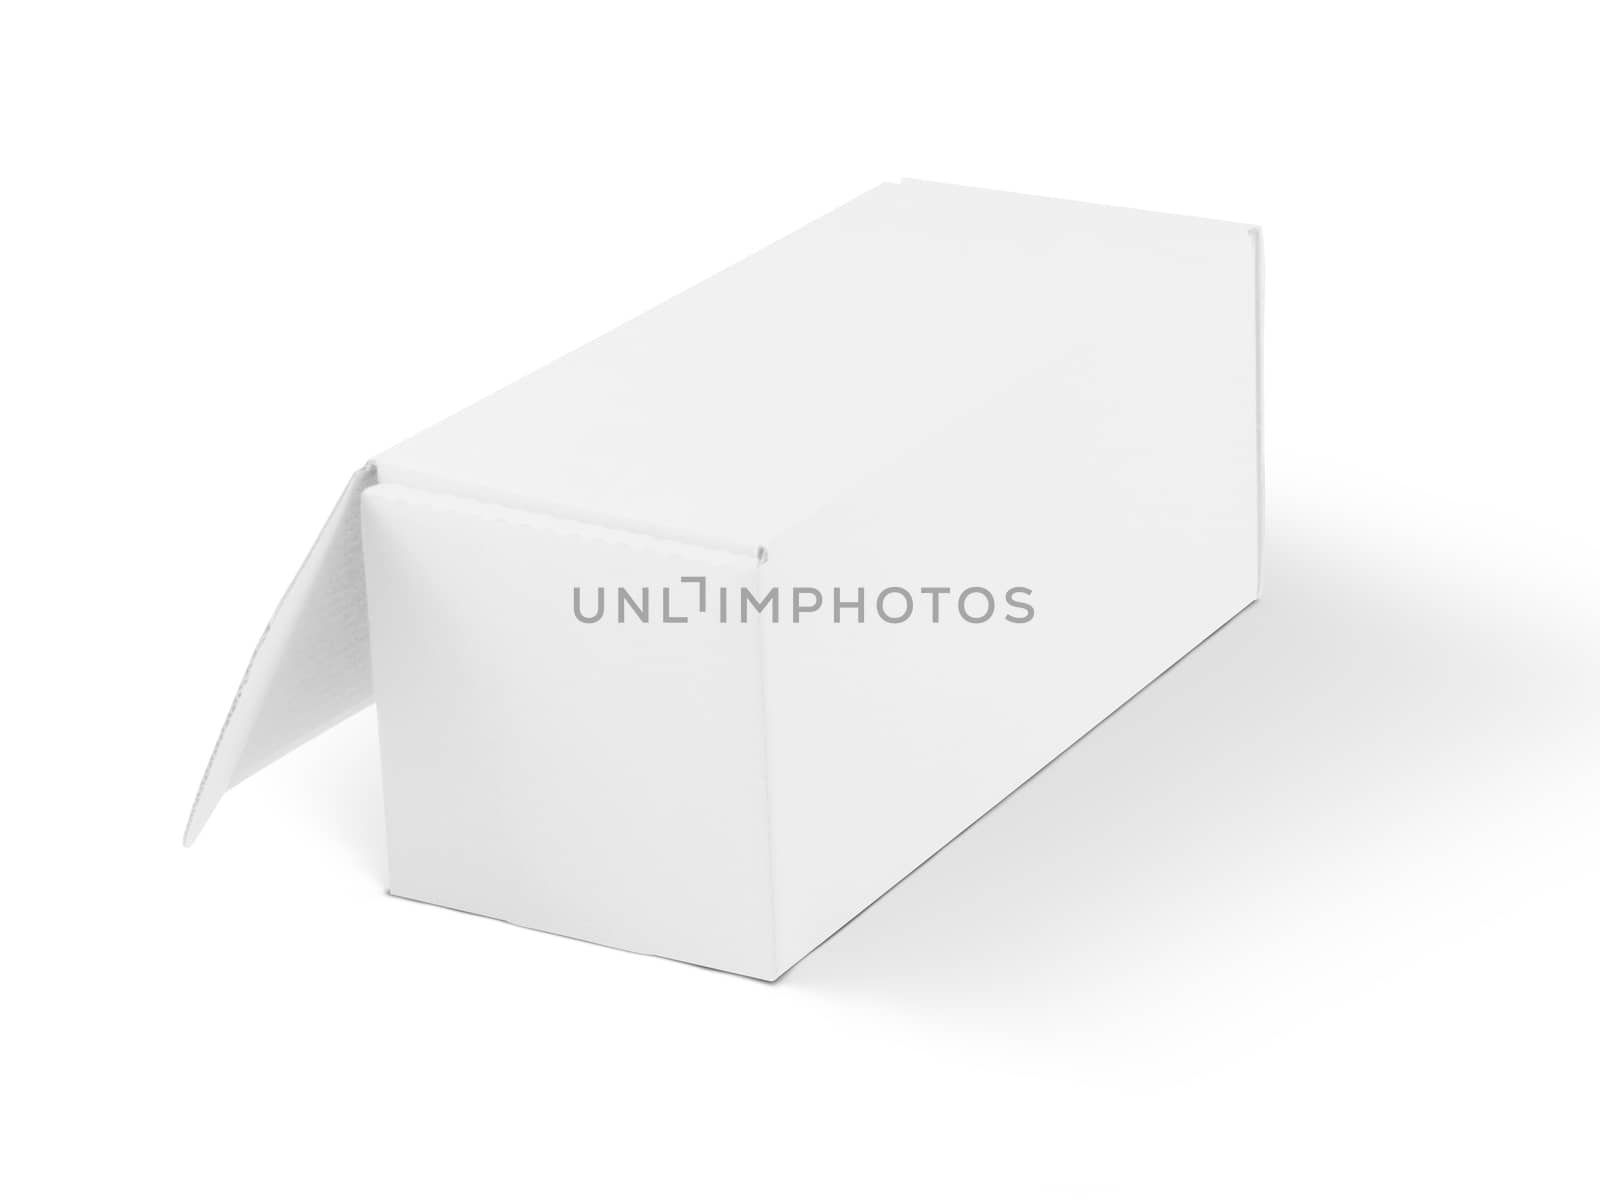 The isolated white packaging box for branding mockup back 